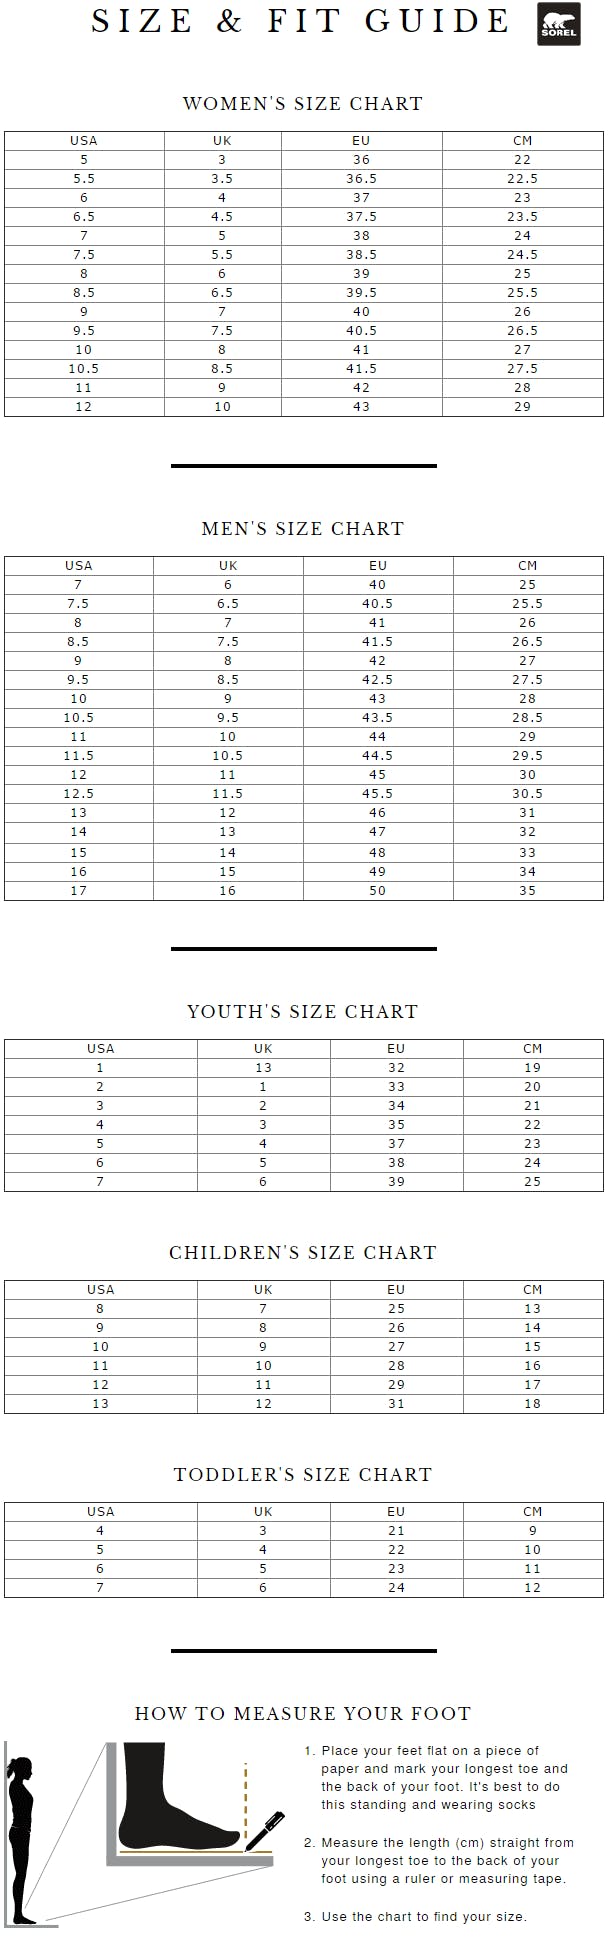 Sorel Youth Size Chart